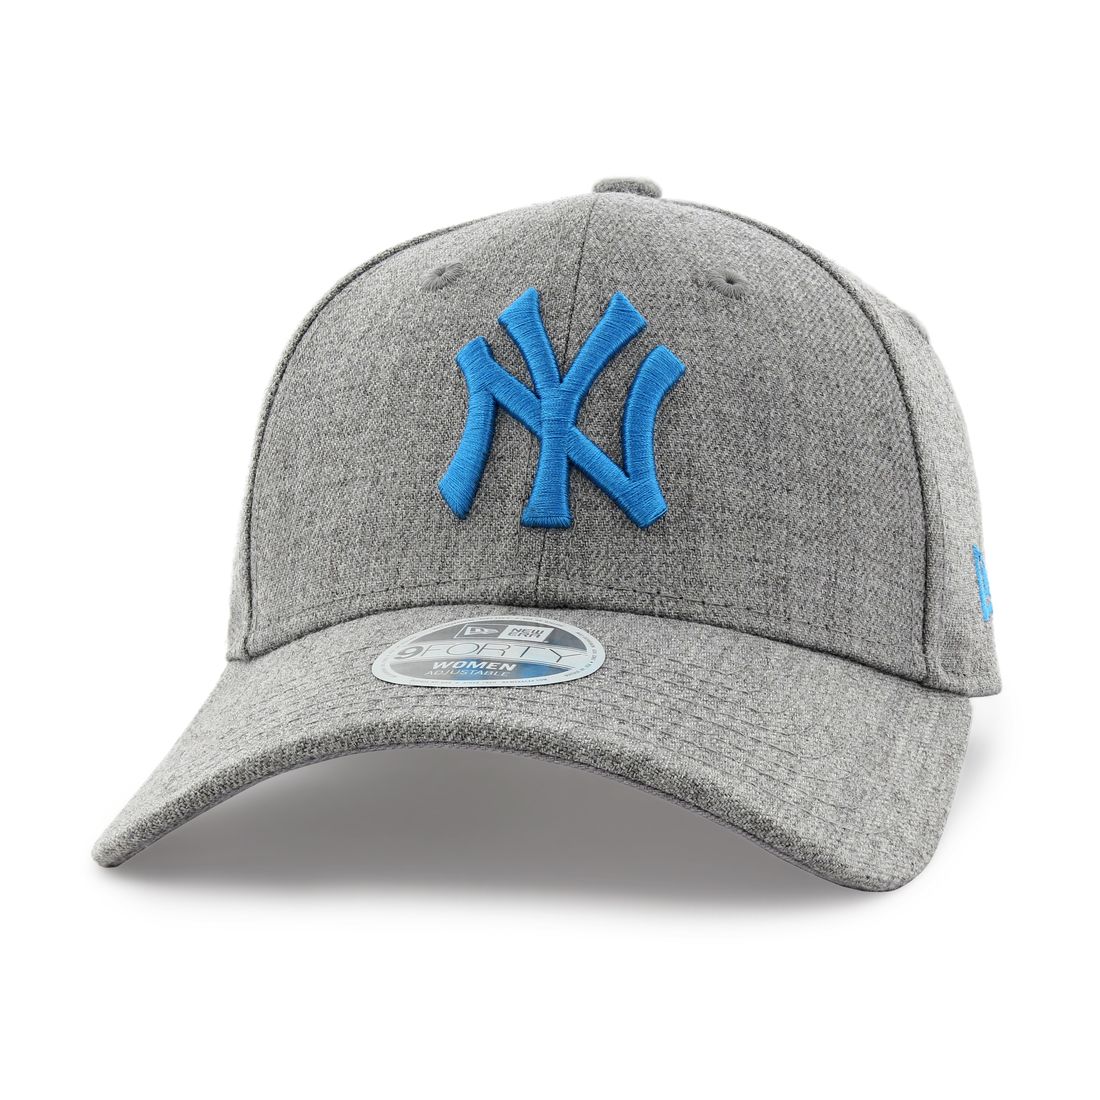 New Era Wmns Jersey New York Yankees Women's Cap Grey